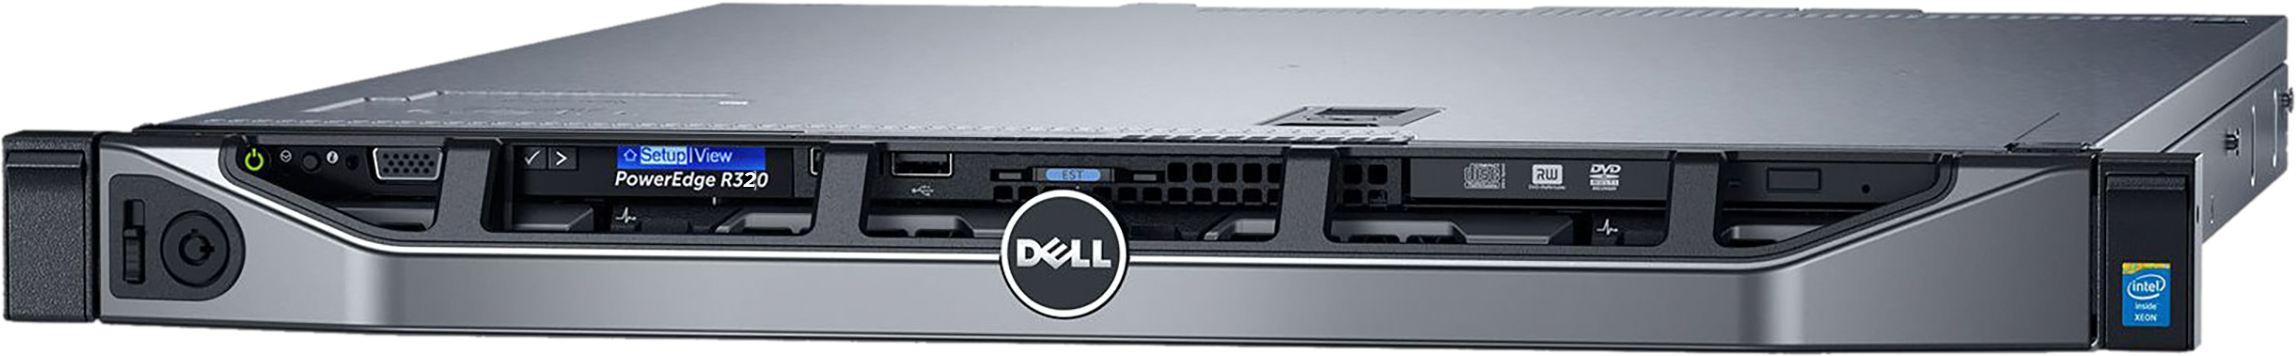 Аренда физического сервера DELL R320 / E5-2450 v2 / 32 GB RAM / 2 x 4 TB HDD / H310